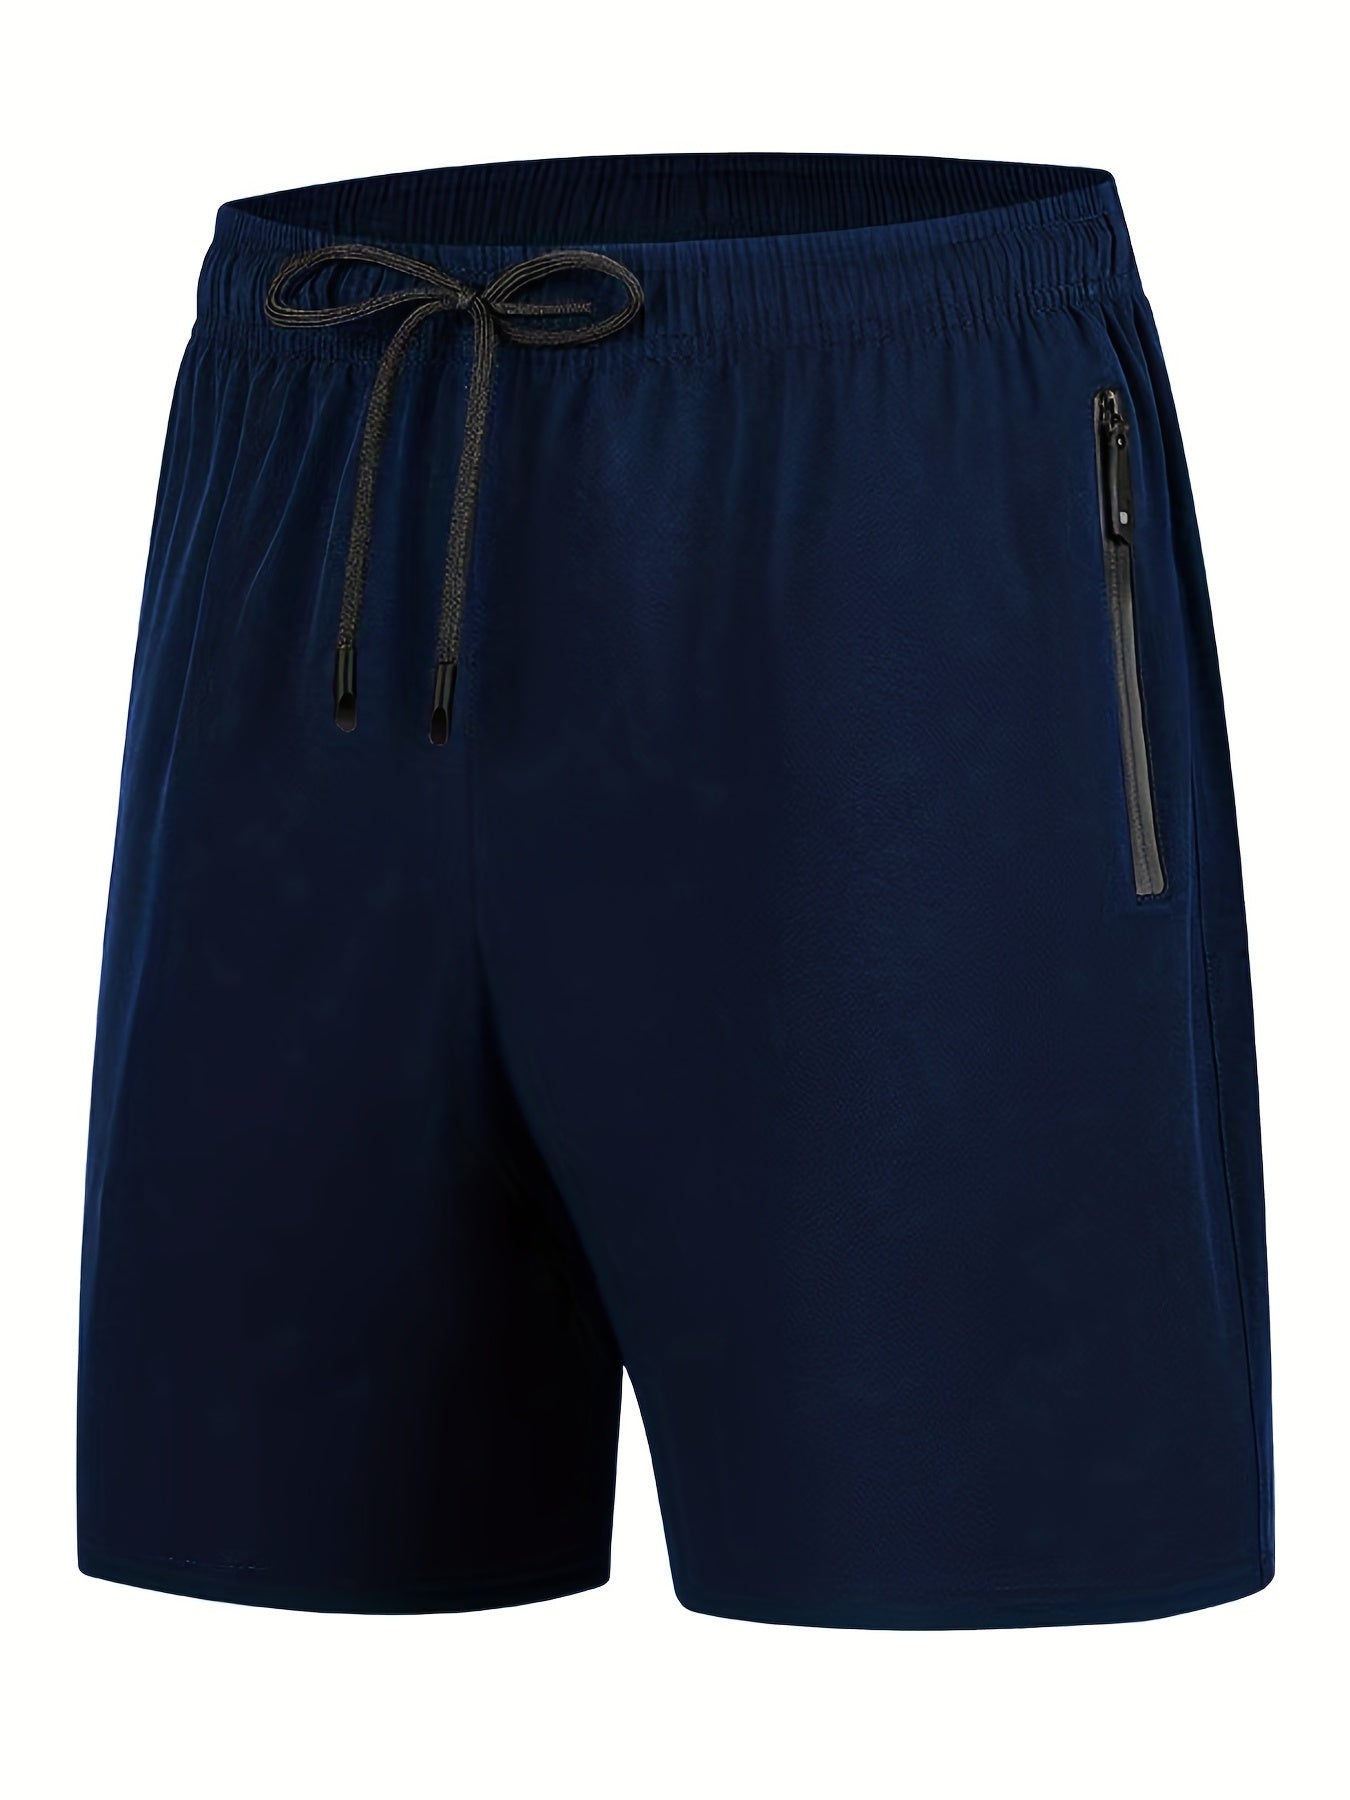 「lovevop」Men's Breathable Shorts With Zipper Pockets, Summer Drawstring Shorts For Running, Fitness, Training